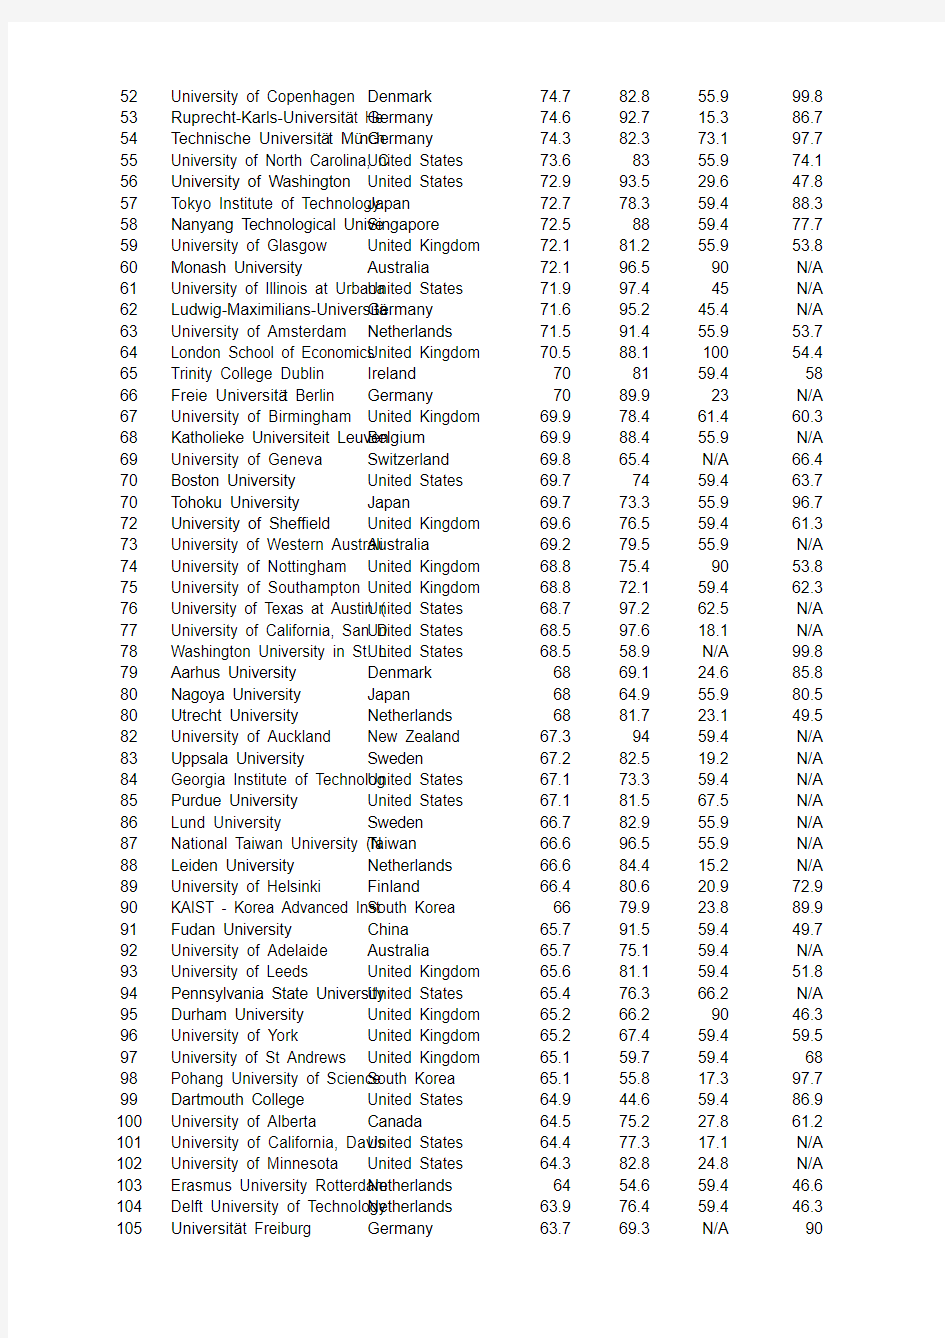 2012 World University Ranking